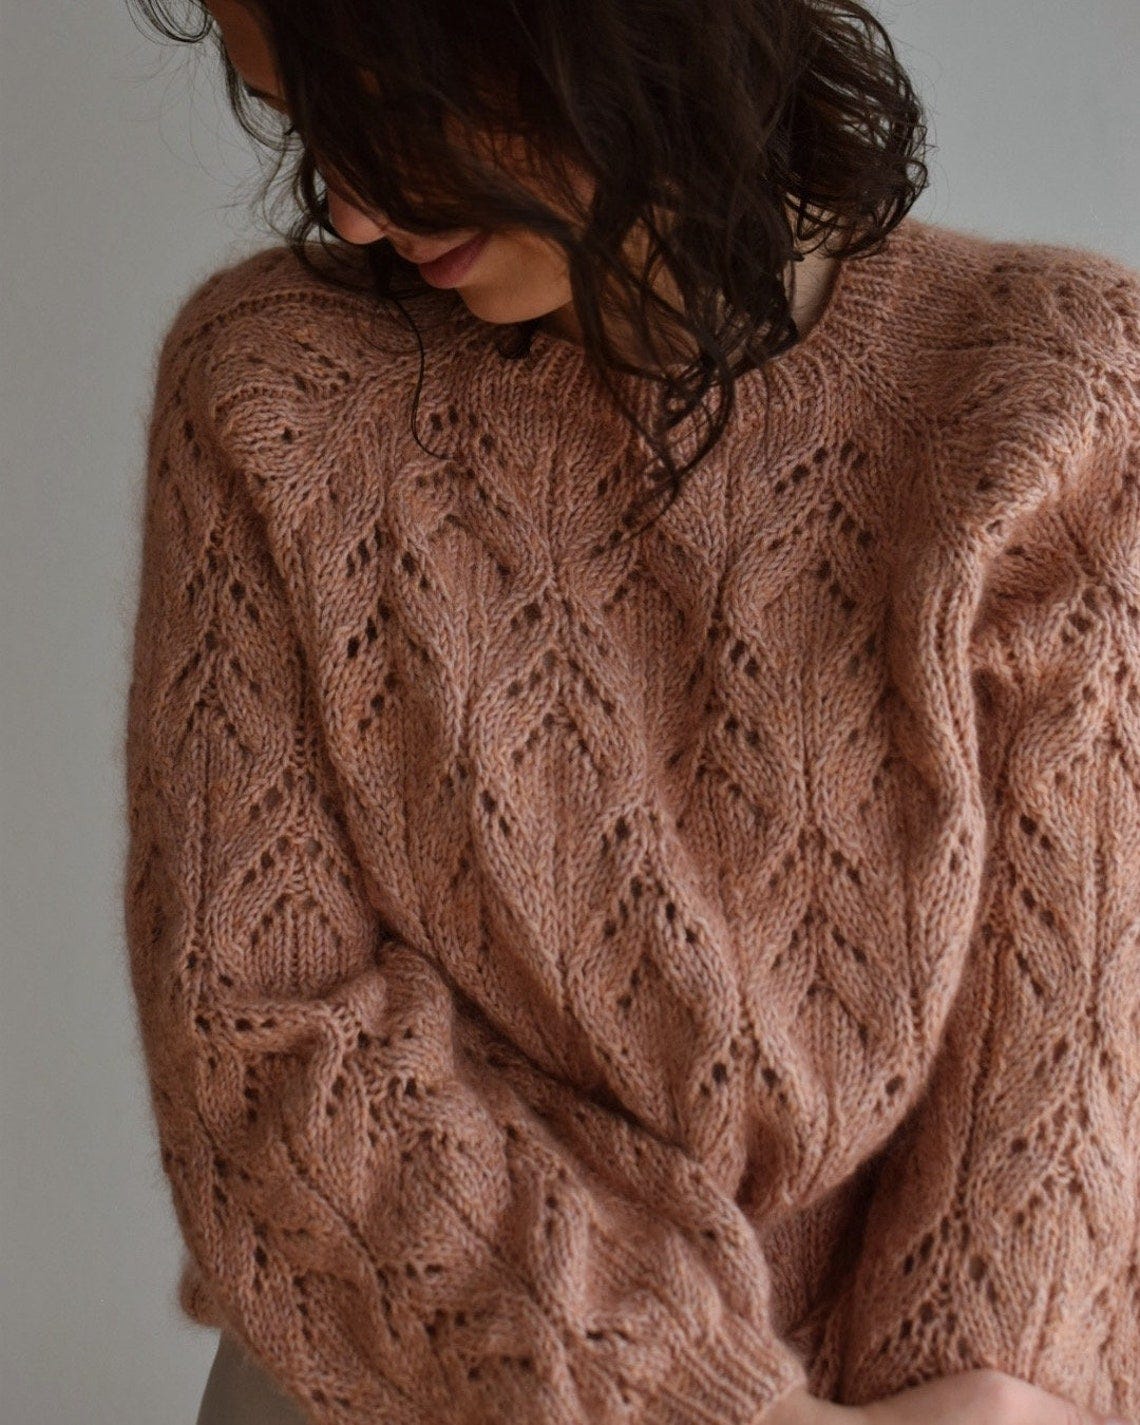 Rosental Sweater knitting pattern design PDF tutorial Lace Kid Silk Mohair sweater knitwear jumper download in English image 1